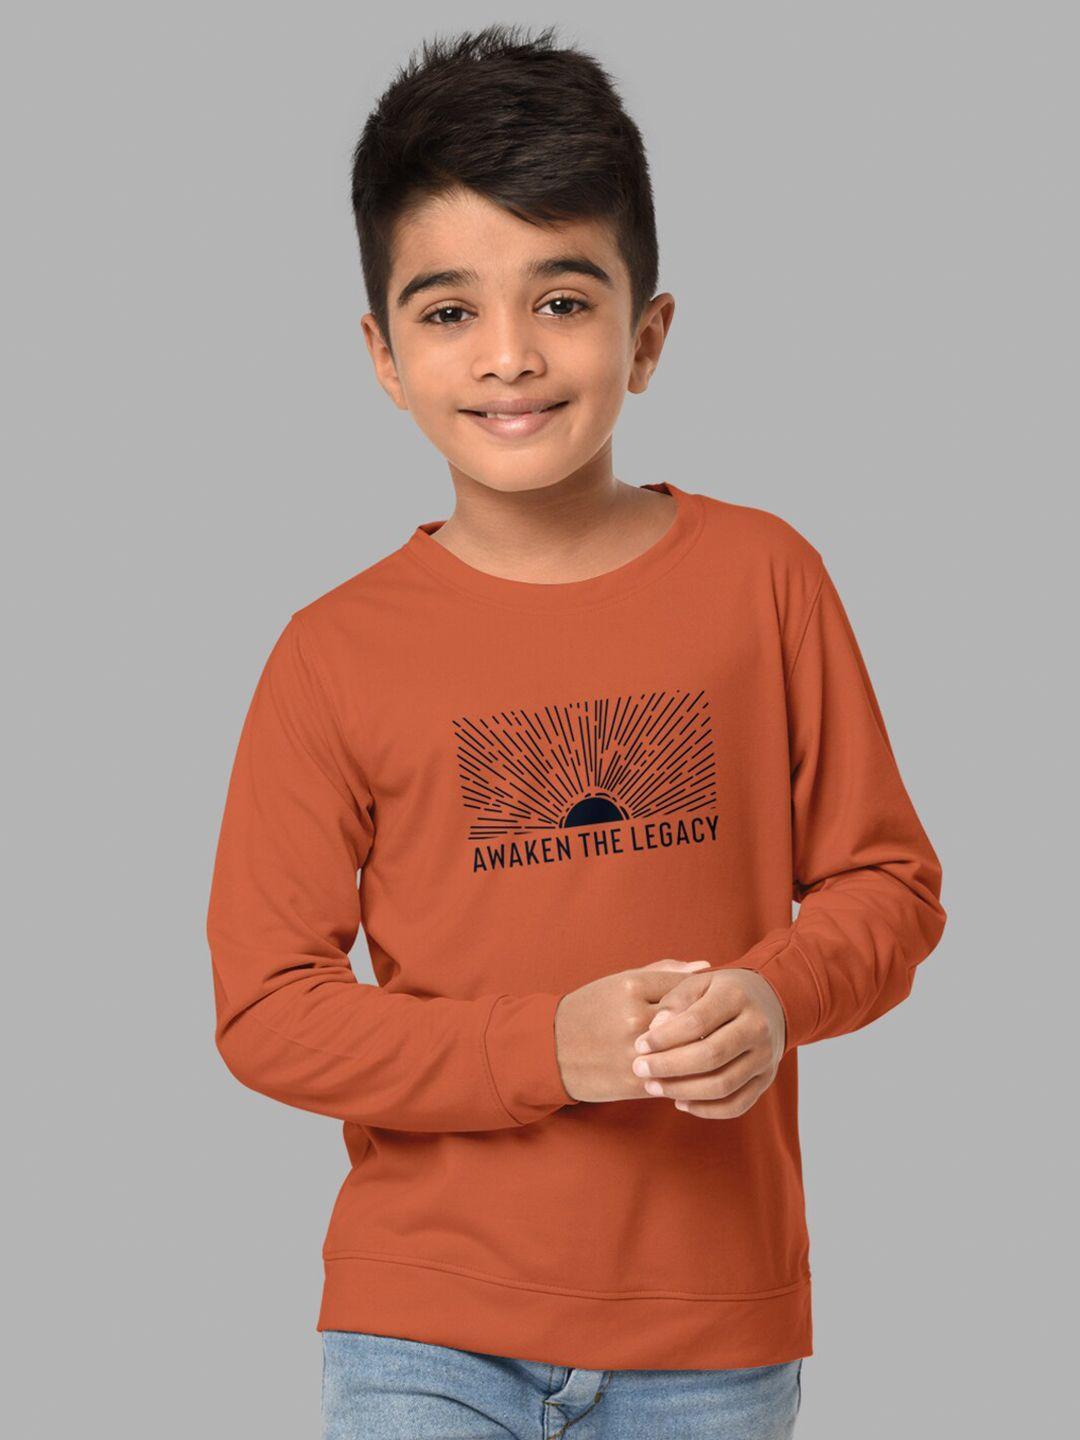 hellcat-boys-orange-regular-fit-blended-cotton-printed-long-sleeve-t-shirt